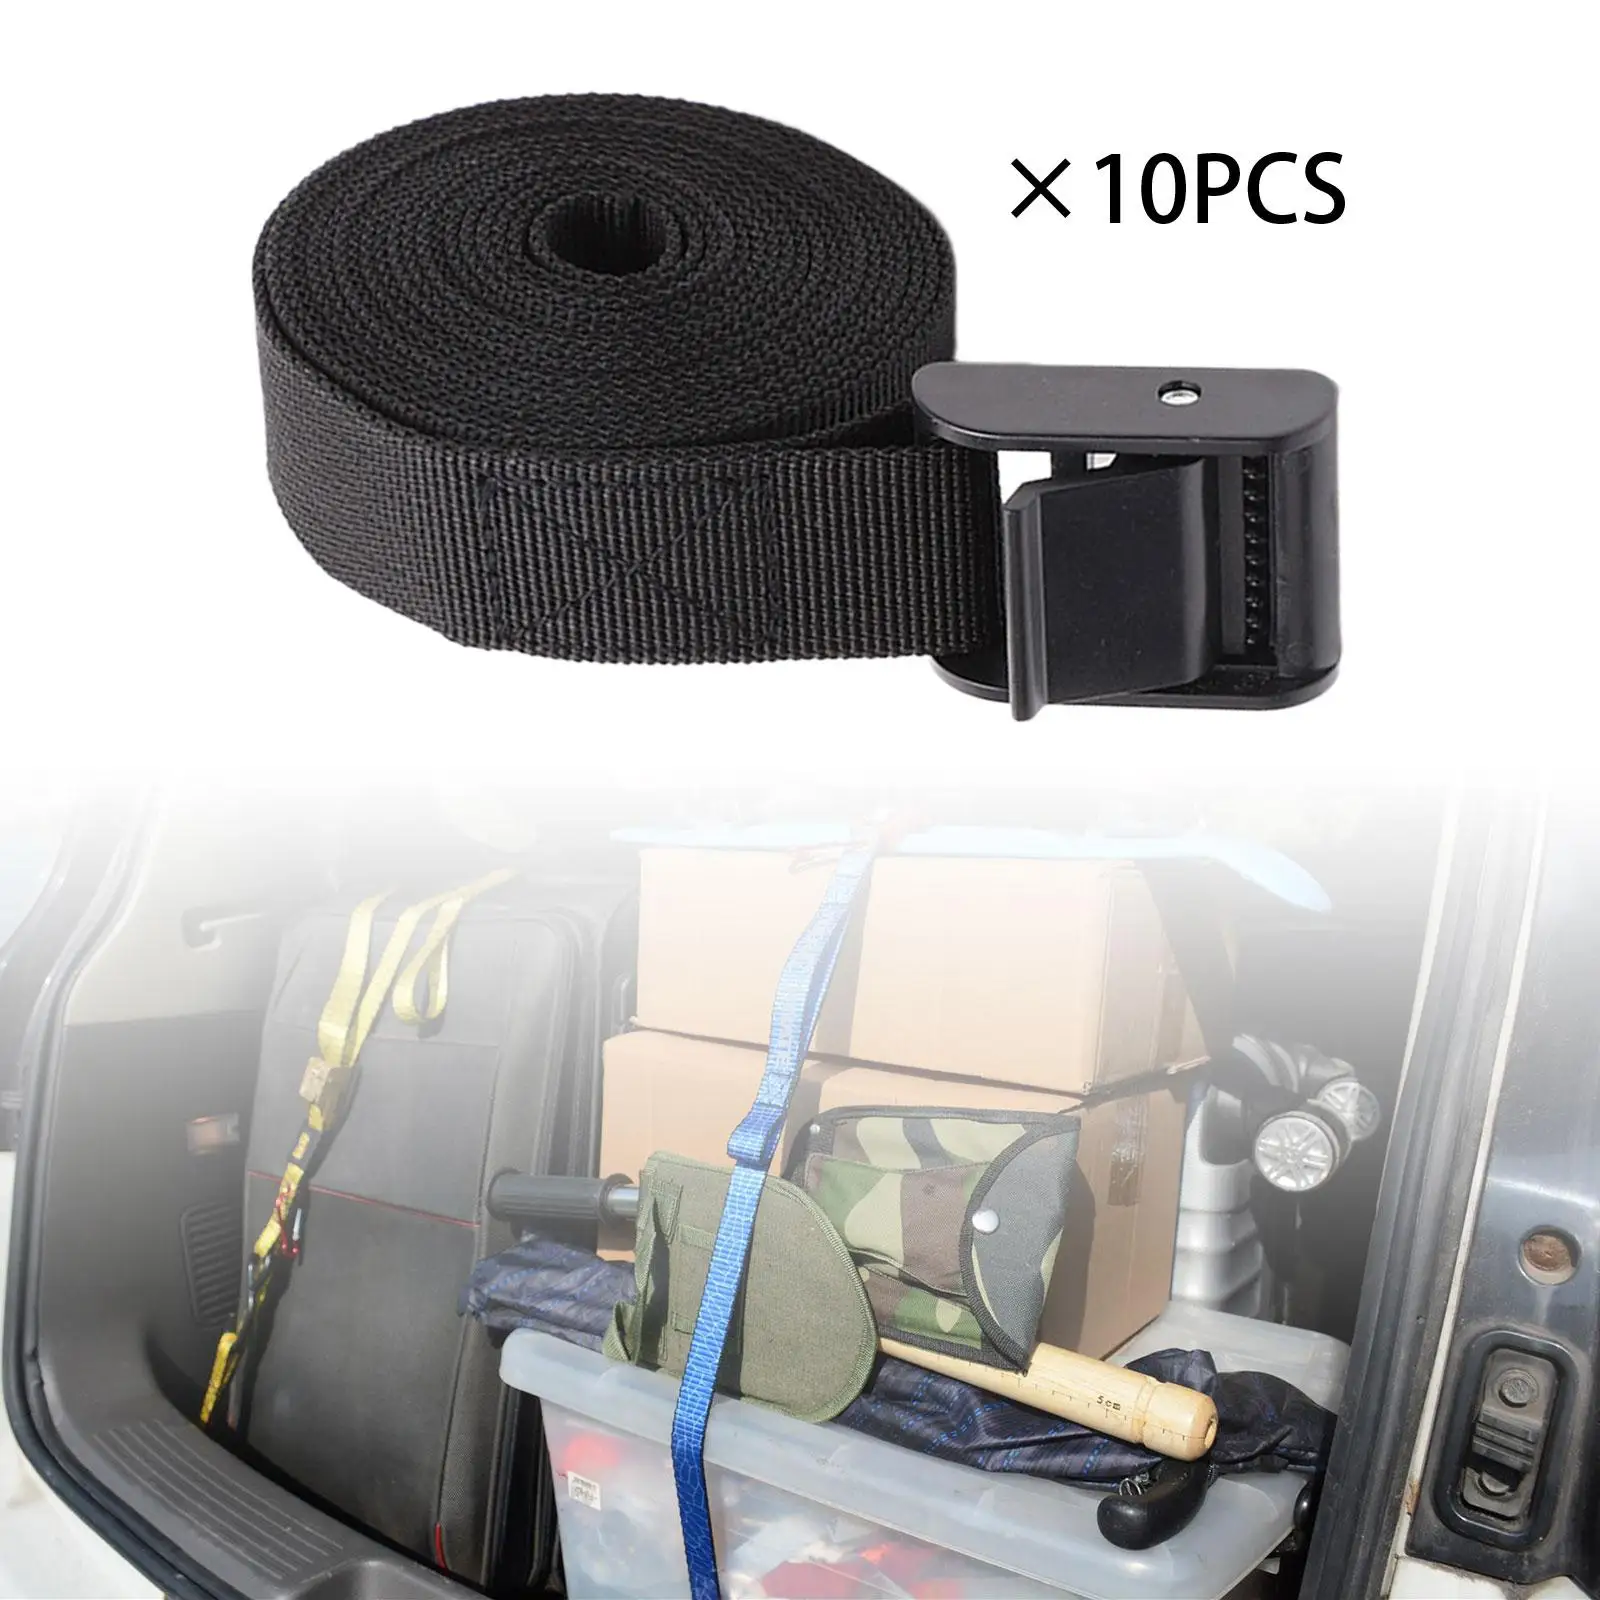 10Pcs Lashing Straps Tie Down Straps 25x500mm Versatile Sturdy Quick Release Buckle Load Securing Straps for Car Truck